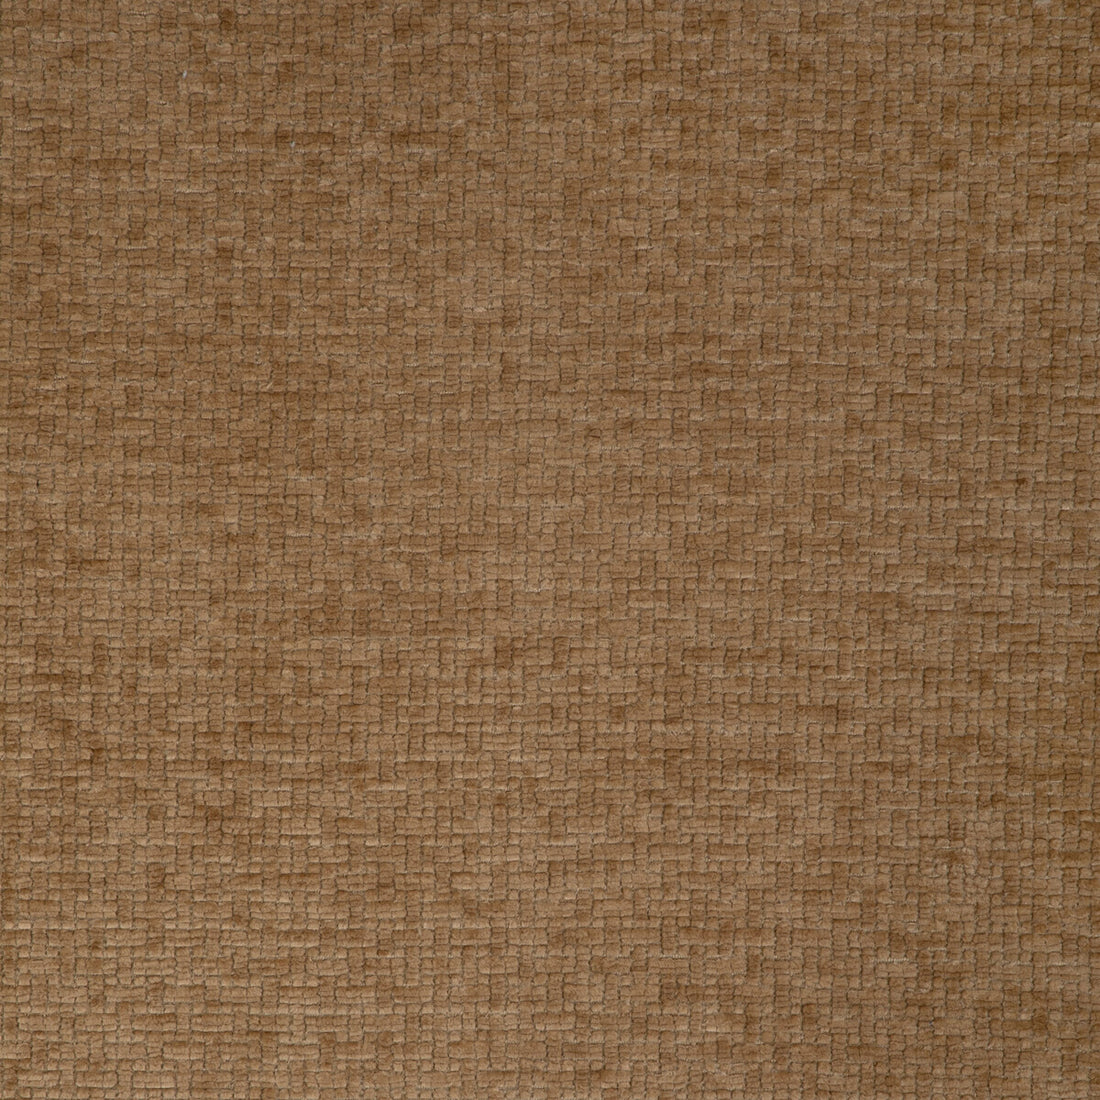 Kravet Smart fabric in 36993-16 color - pattern 36993.16.0 - by Kravet Smart in the Performance Kravetarmor collection